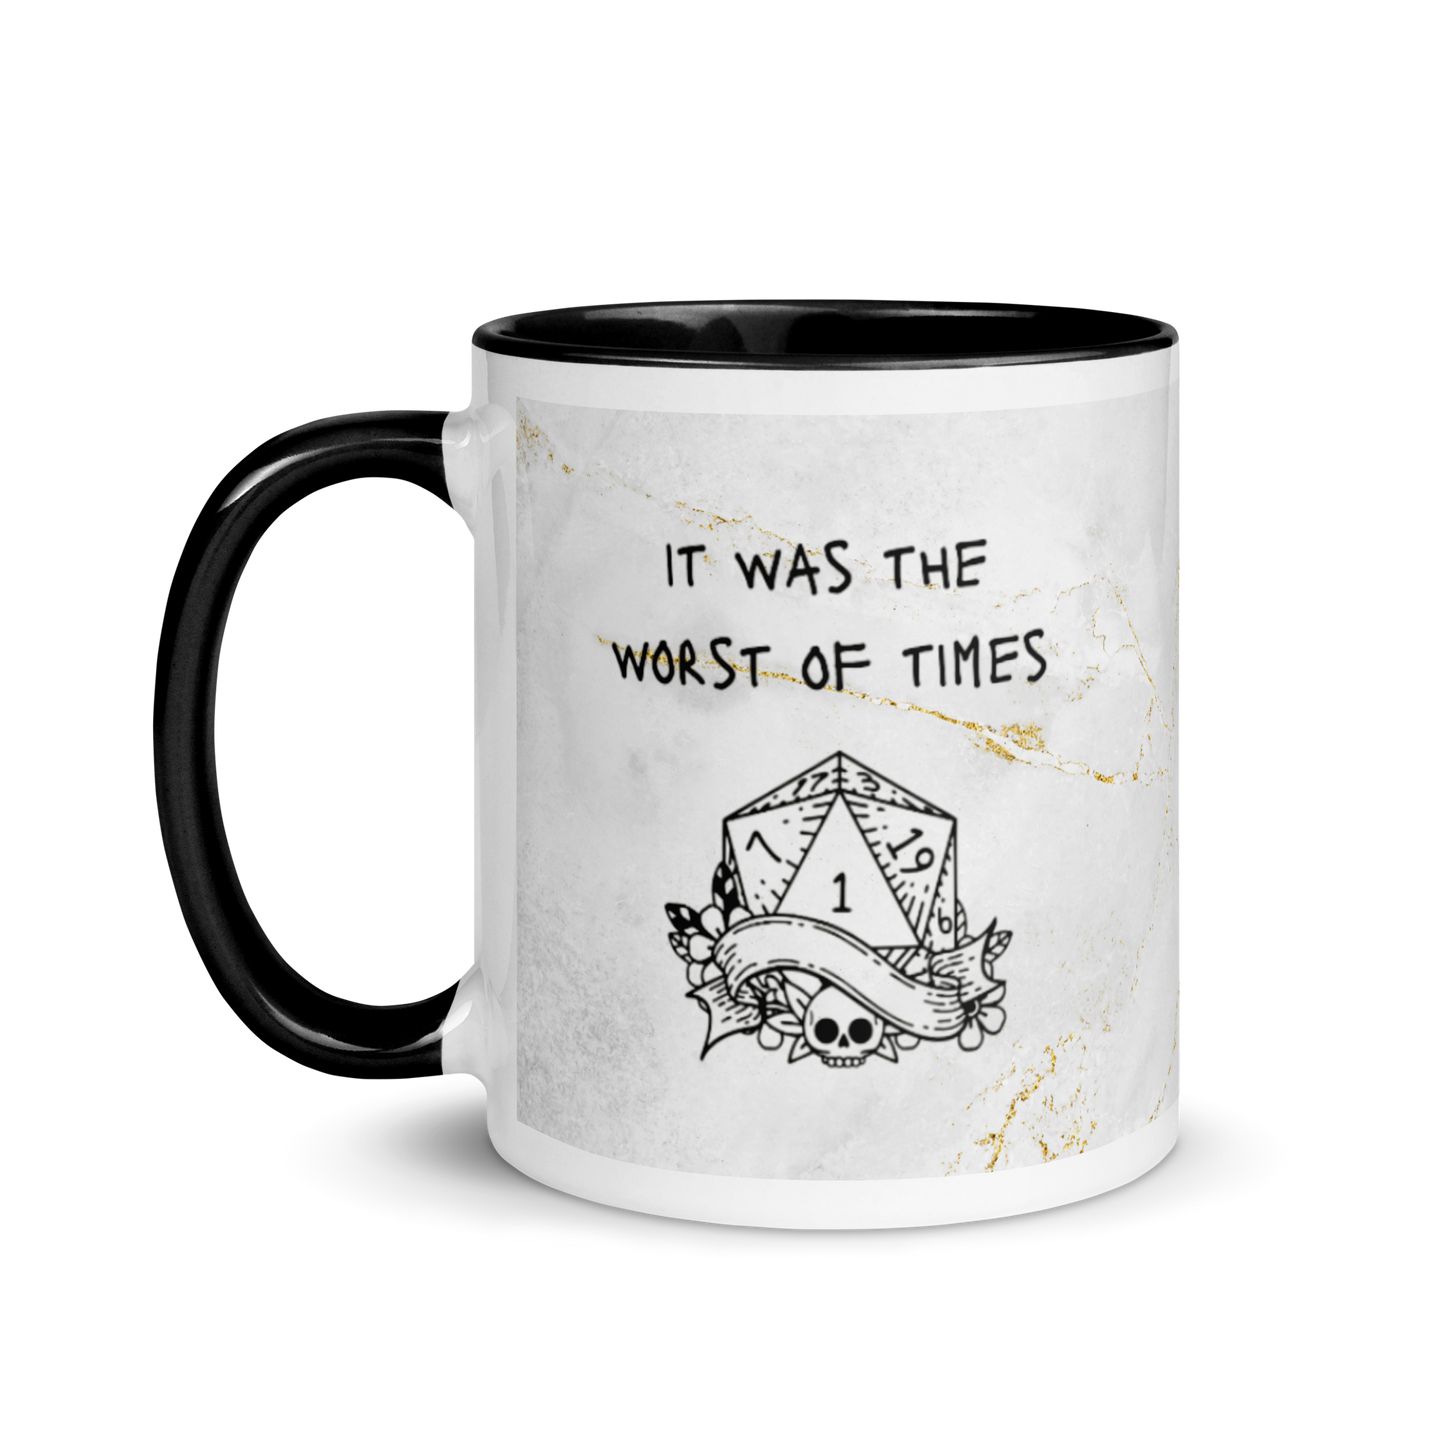 Best and worst D20 mug